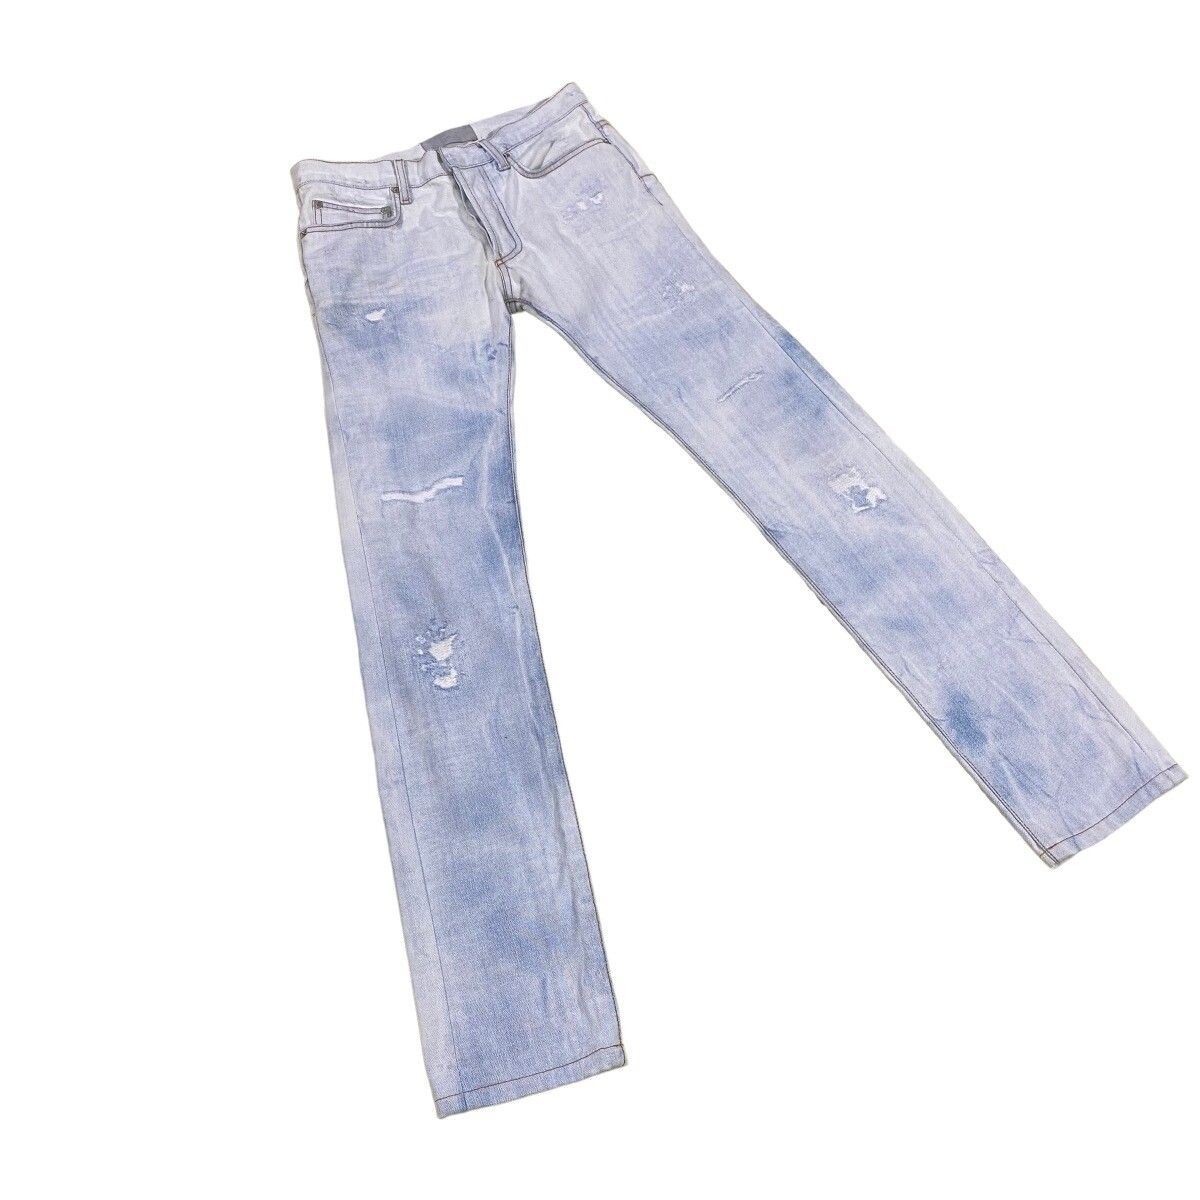 Dior Homme SS06 Dirty Snow Denim Jeans - 2